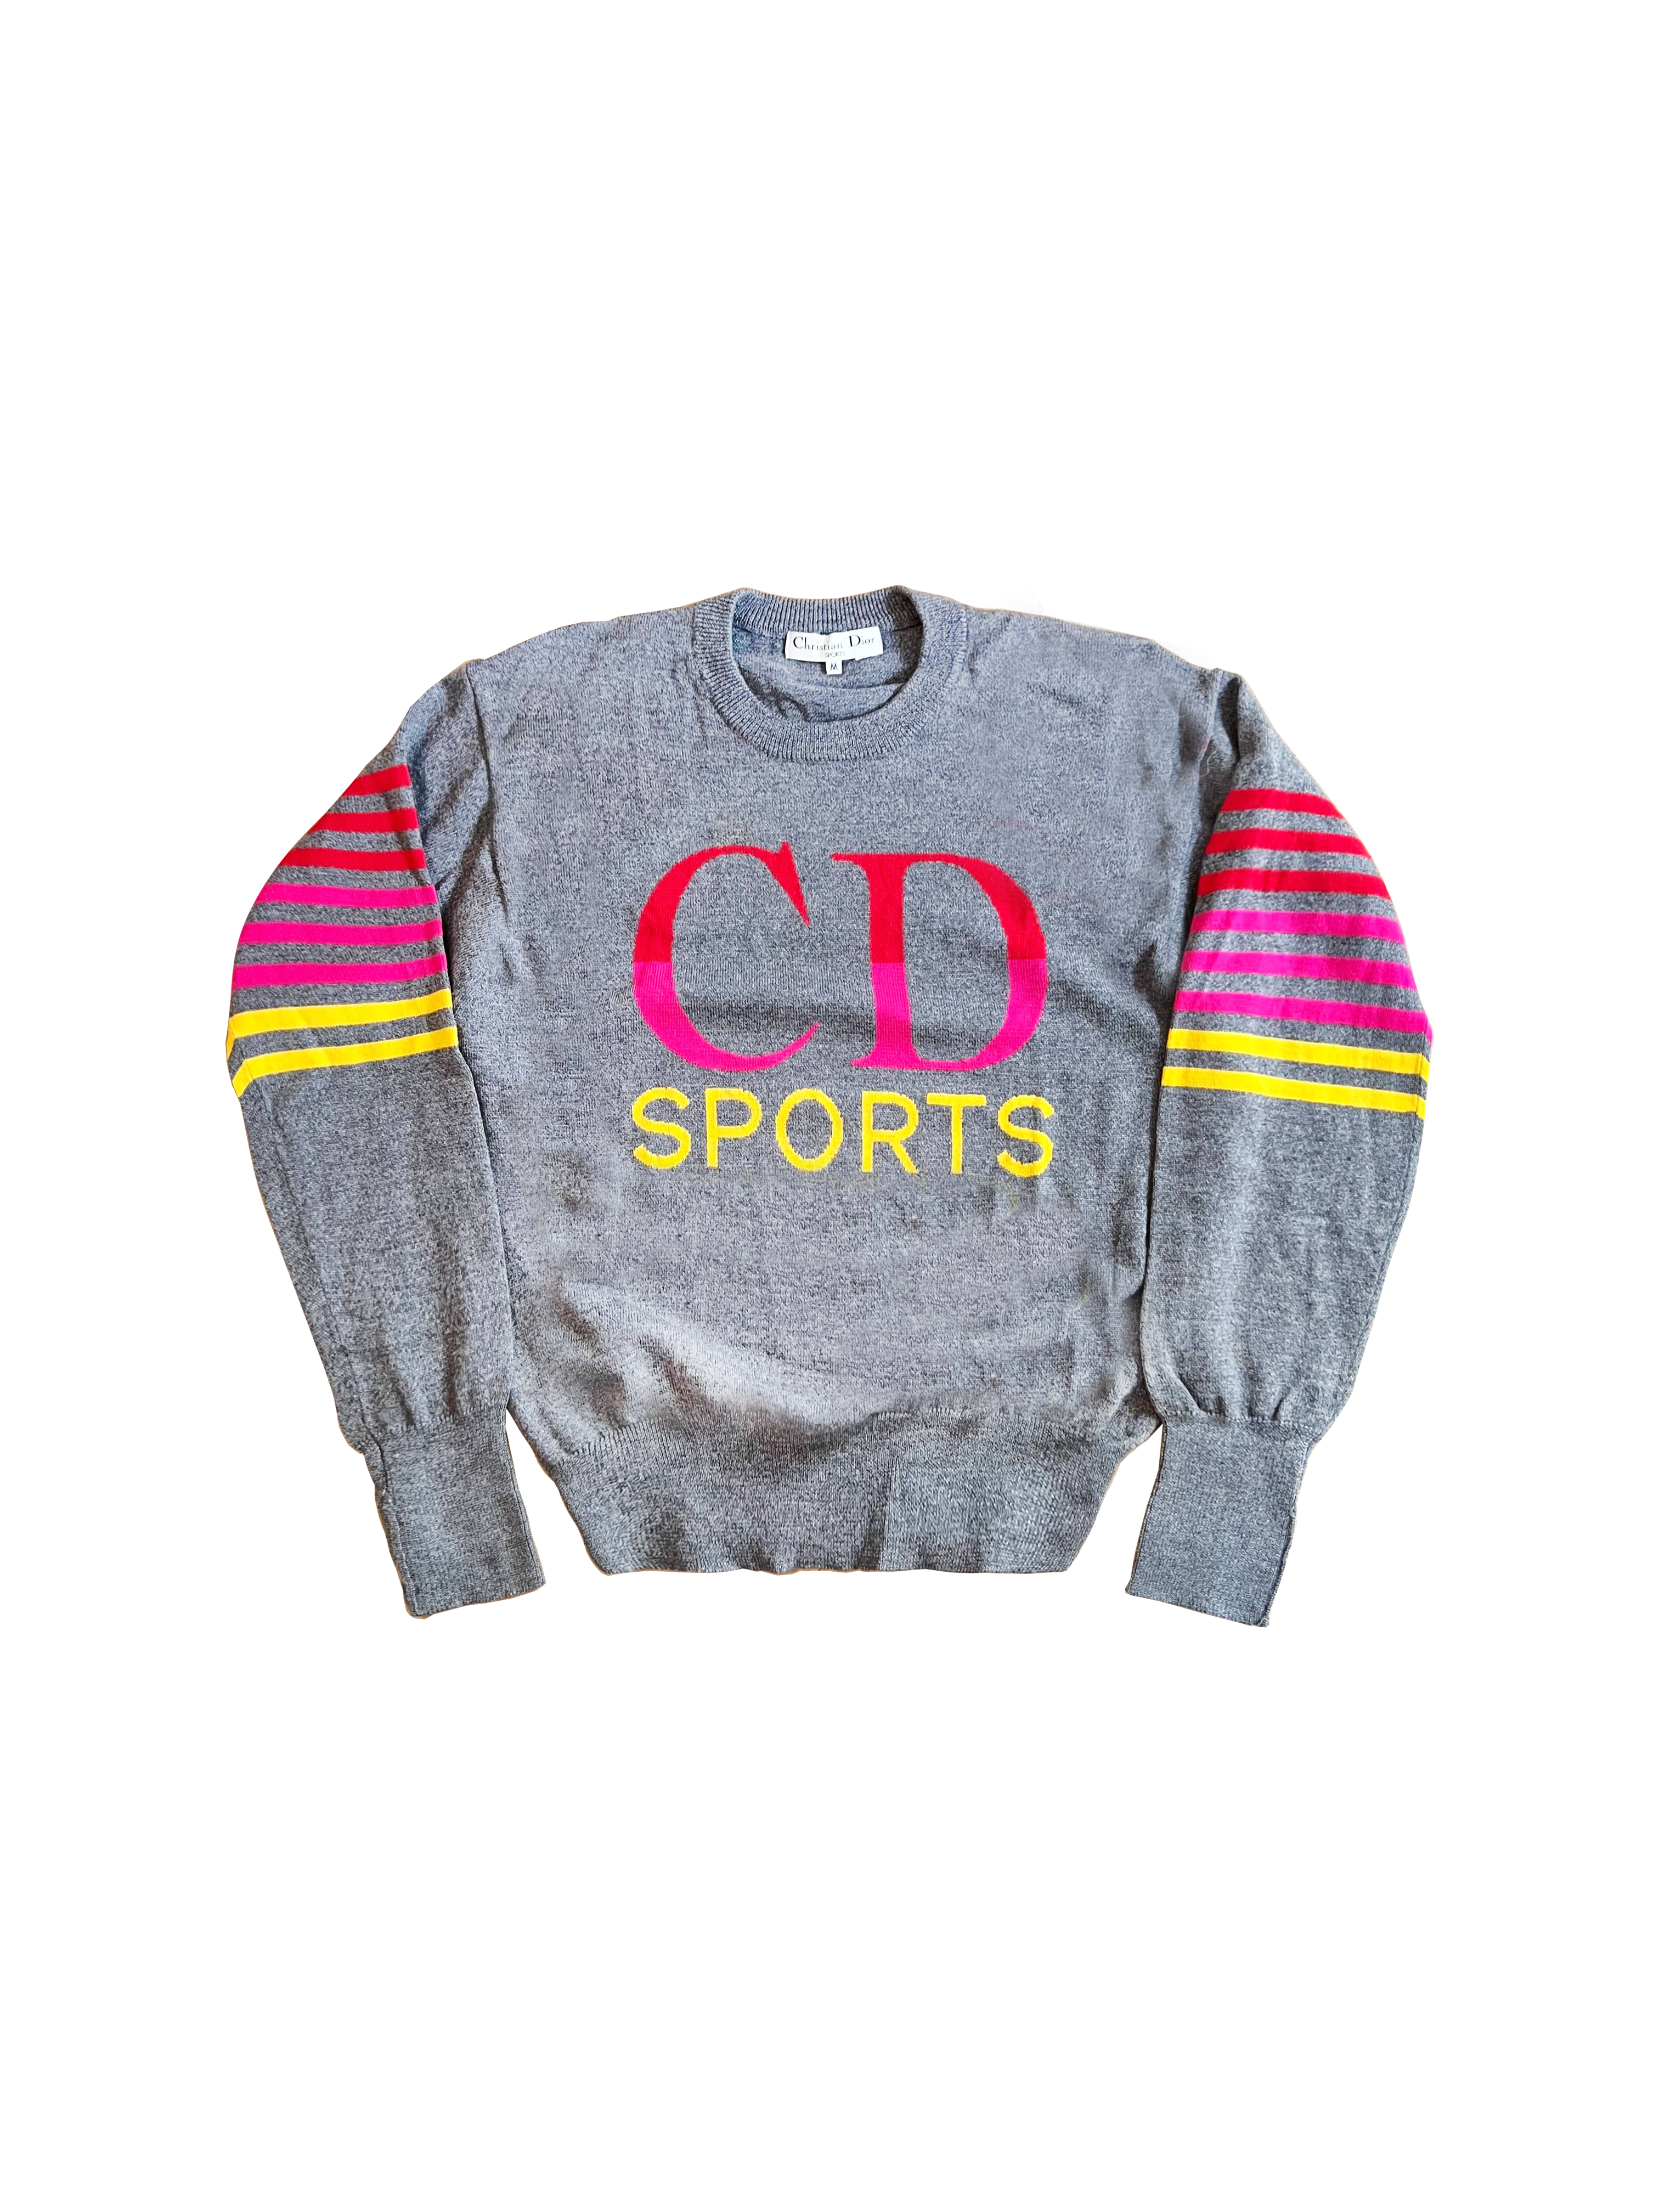 Christian Dior 1980s CD Sports Grey Sweater